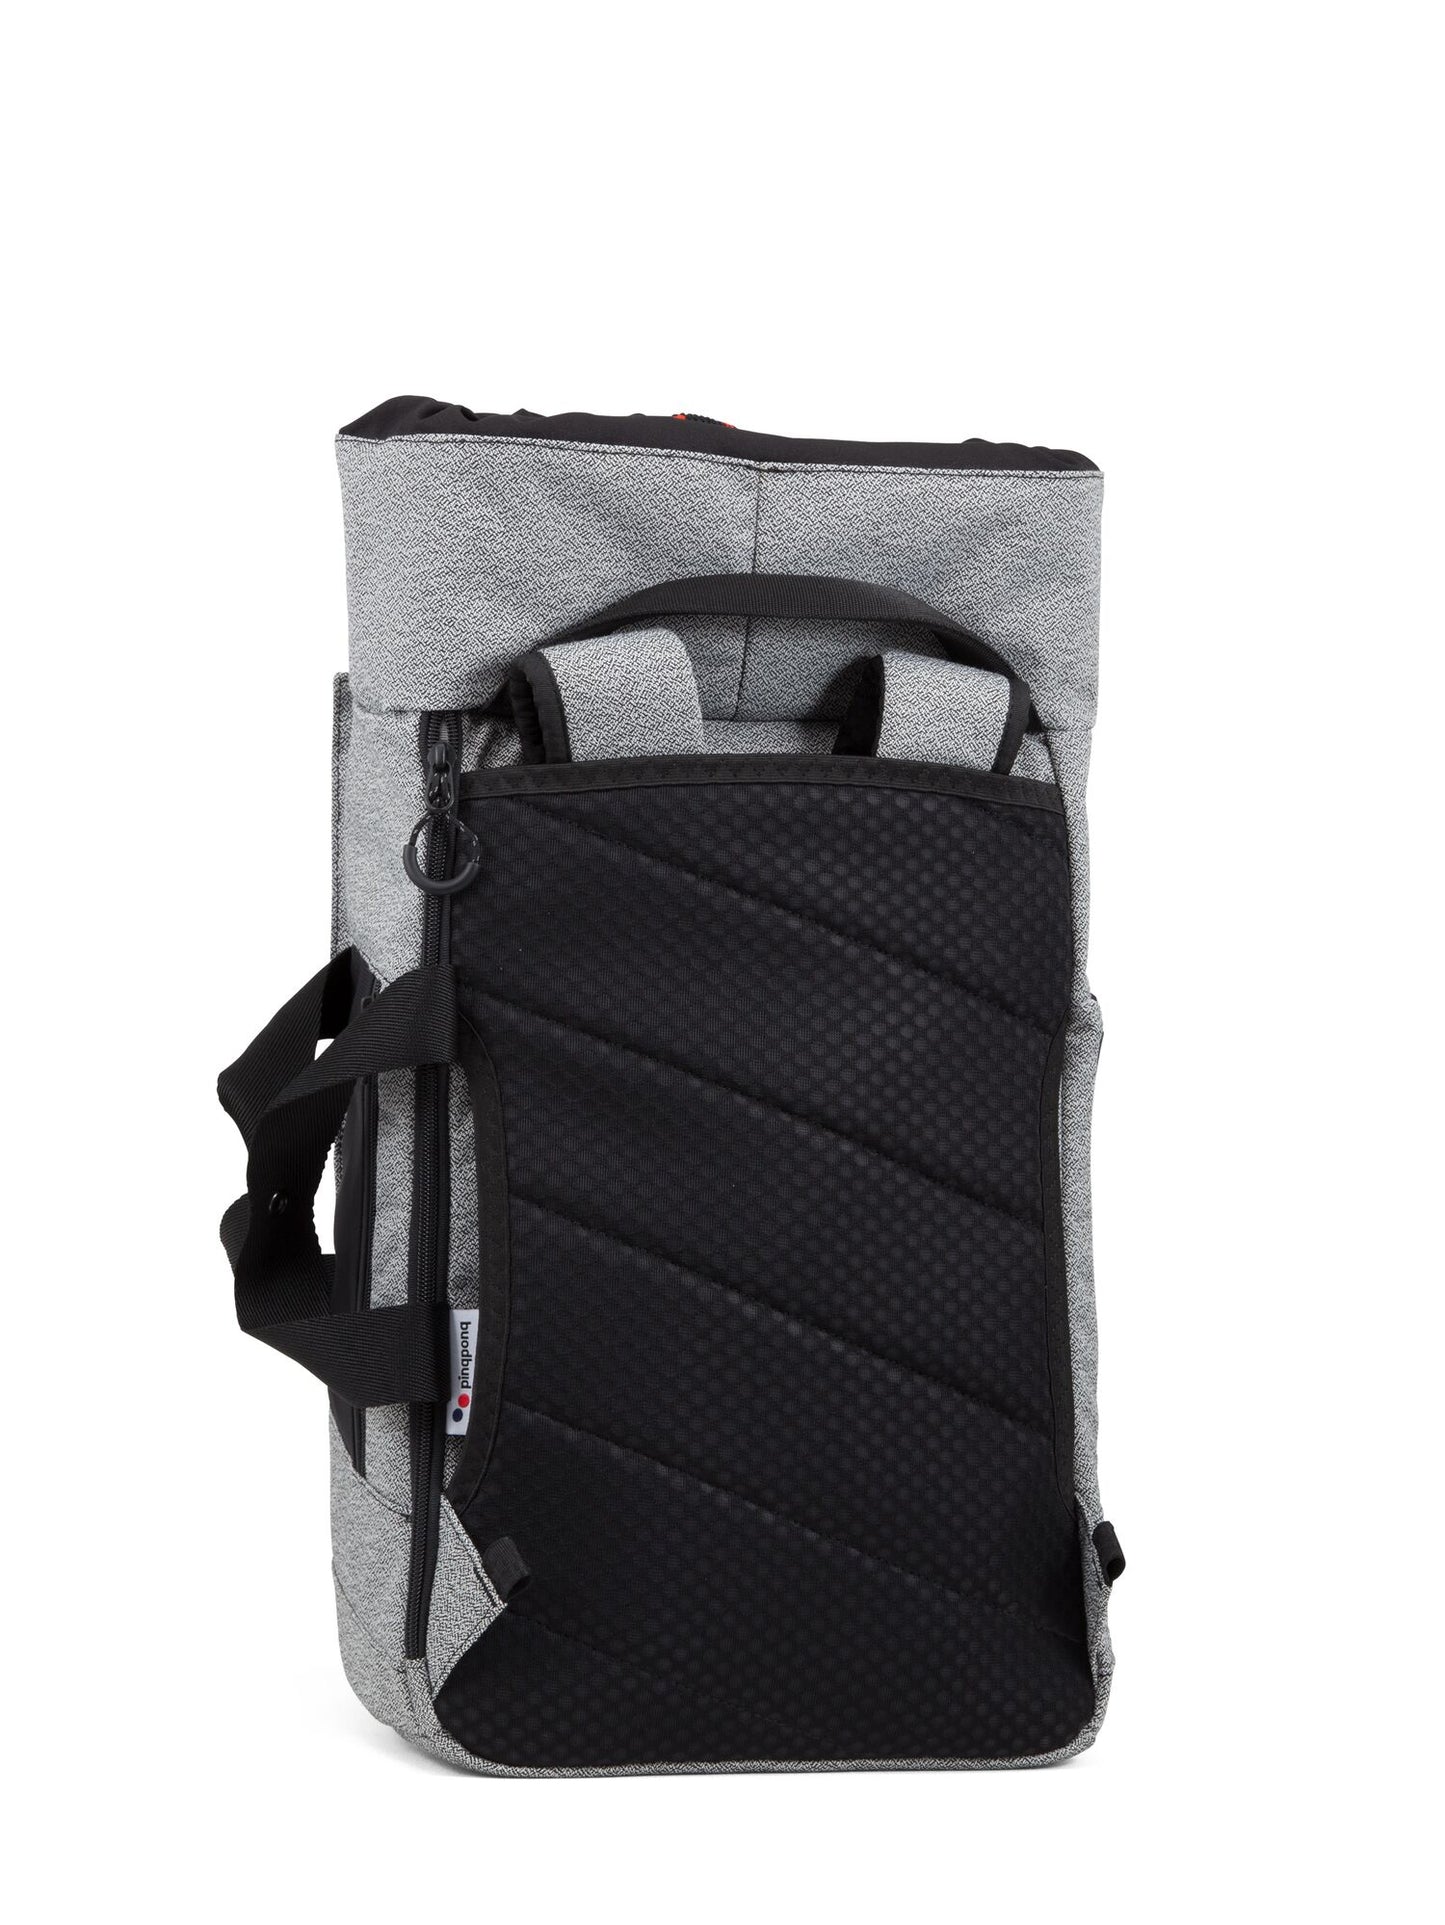 pinqponq-backpack-Blok-Medium-Vivid-Monochrome-detail